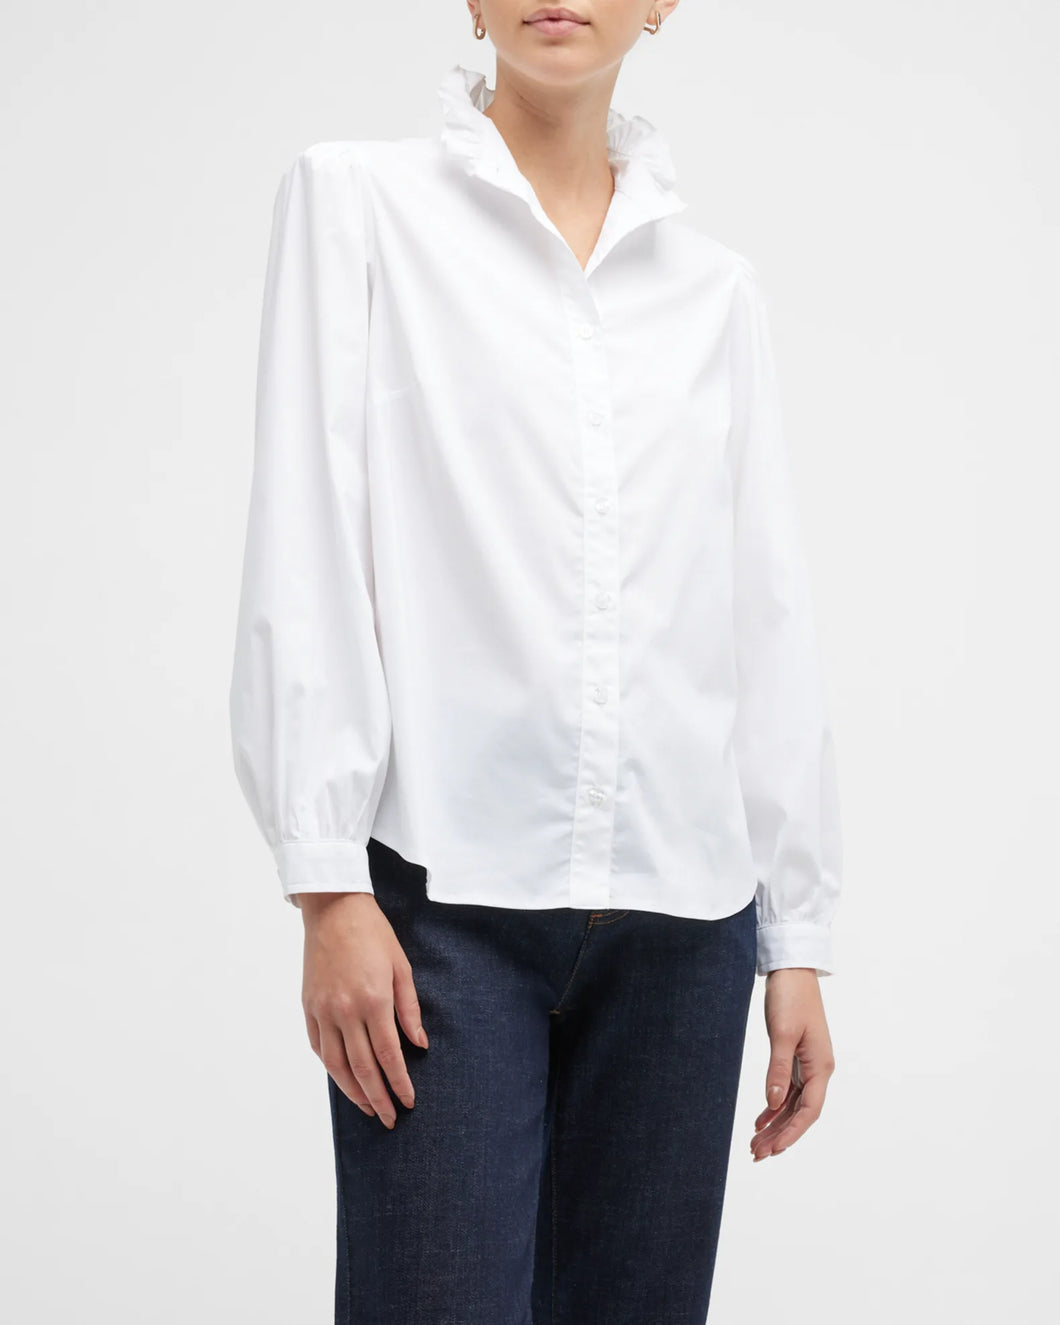 Mystie Puff-Sleeve Poplin Shirt in white by Finley